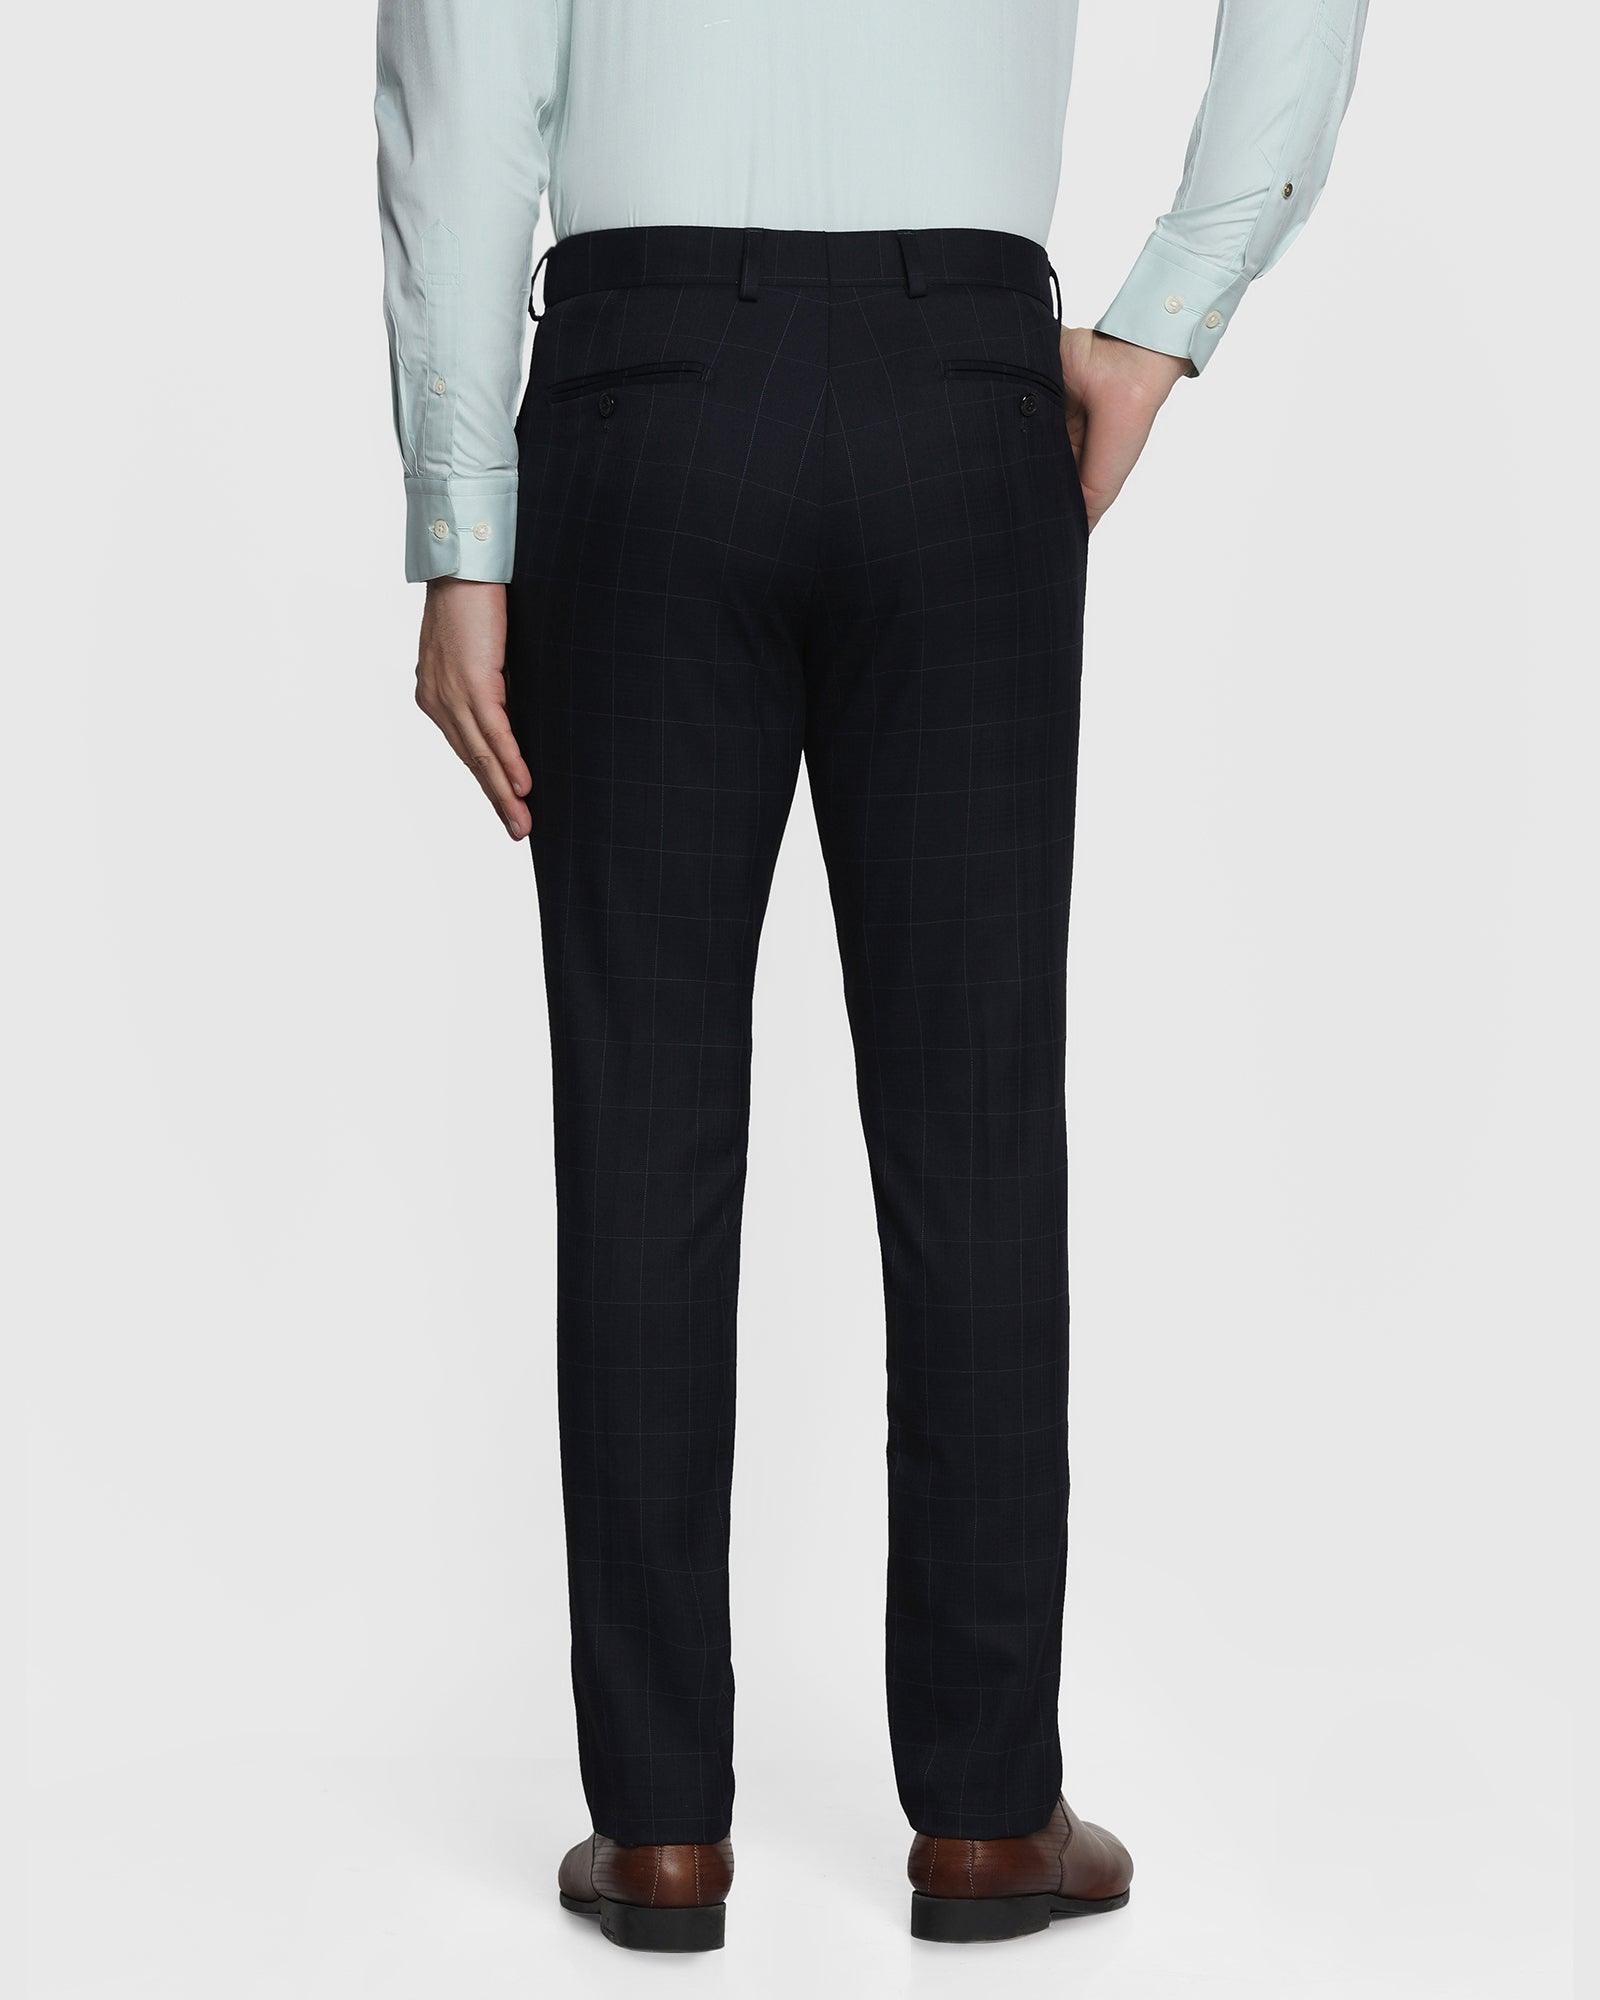 Buy Men's Business Pants Skinny Fit Plaid Flat-Front Stretch Slim Stylish  Casual Golf Dress Pants, Black 1, Medium at Amazon.in